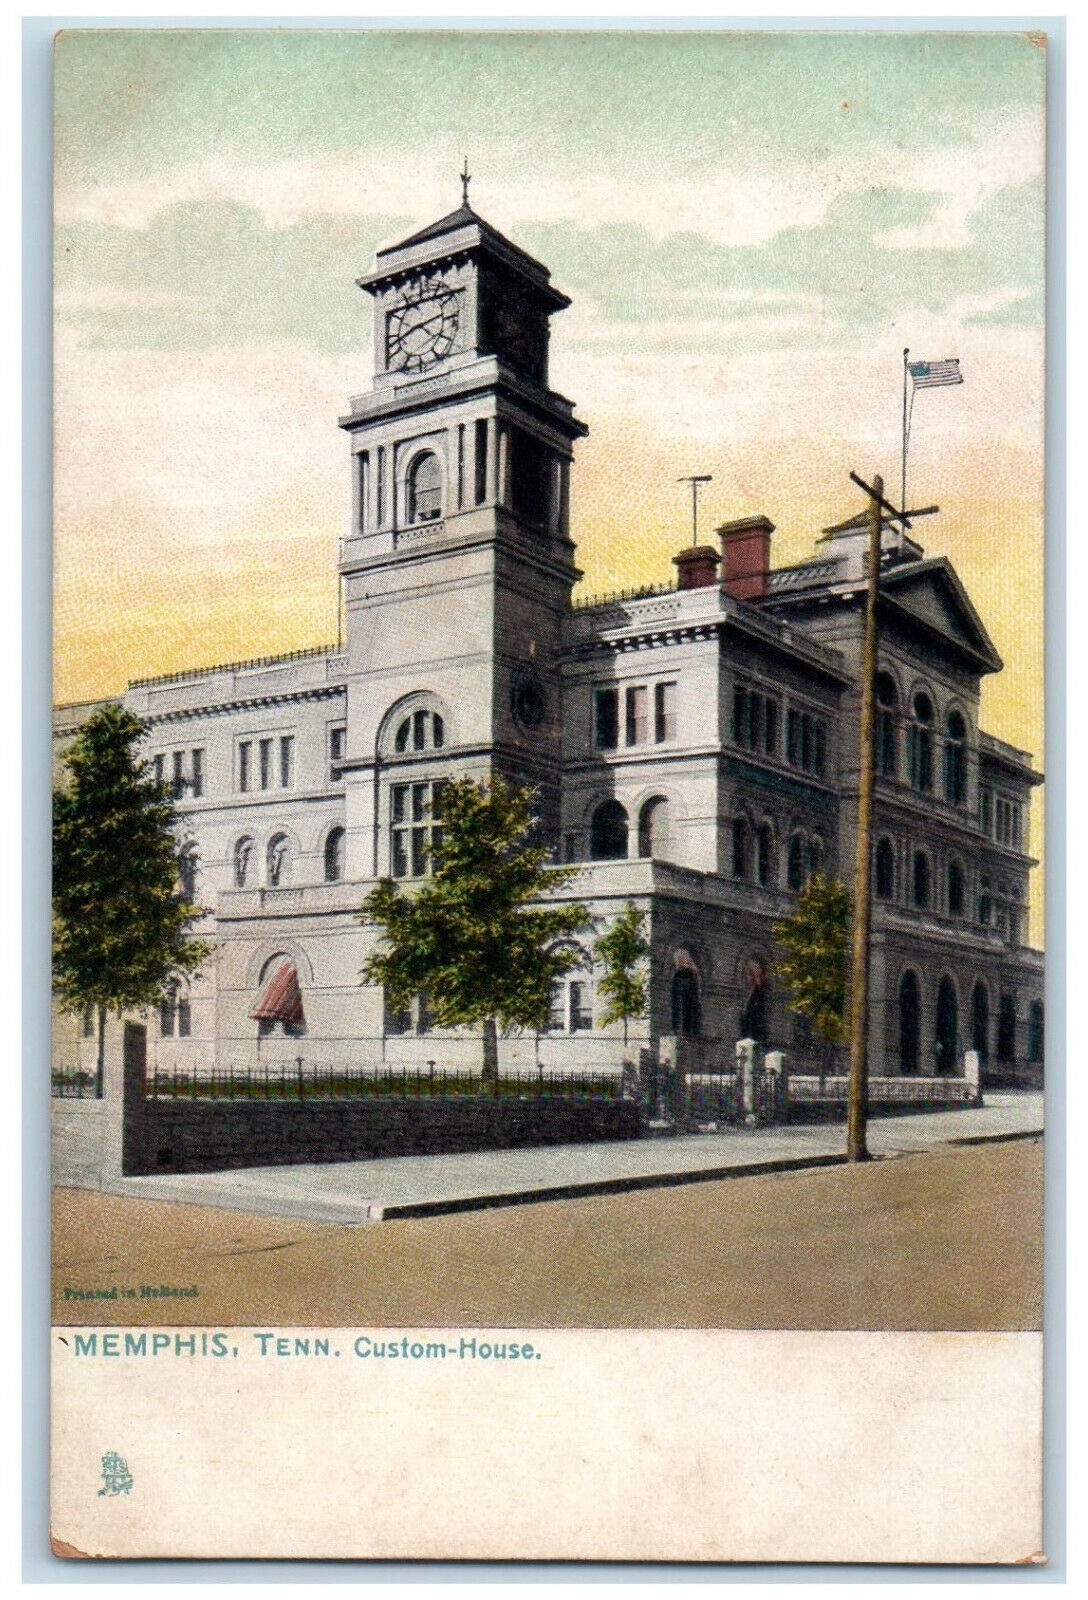 U.S Custom-house Building Memphis Tennessee TN Tuck's Antique Unposted Postcard